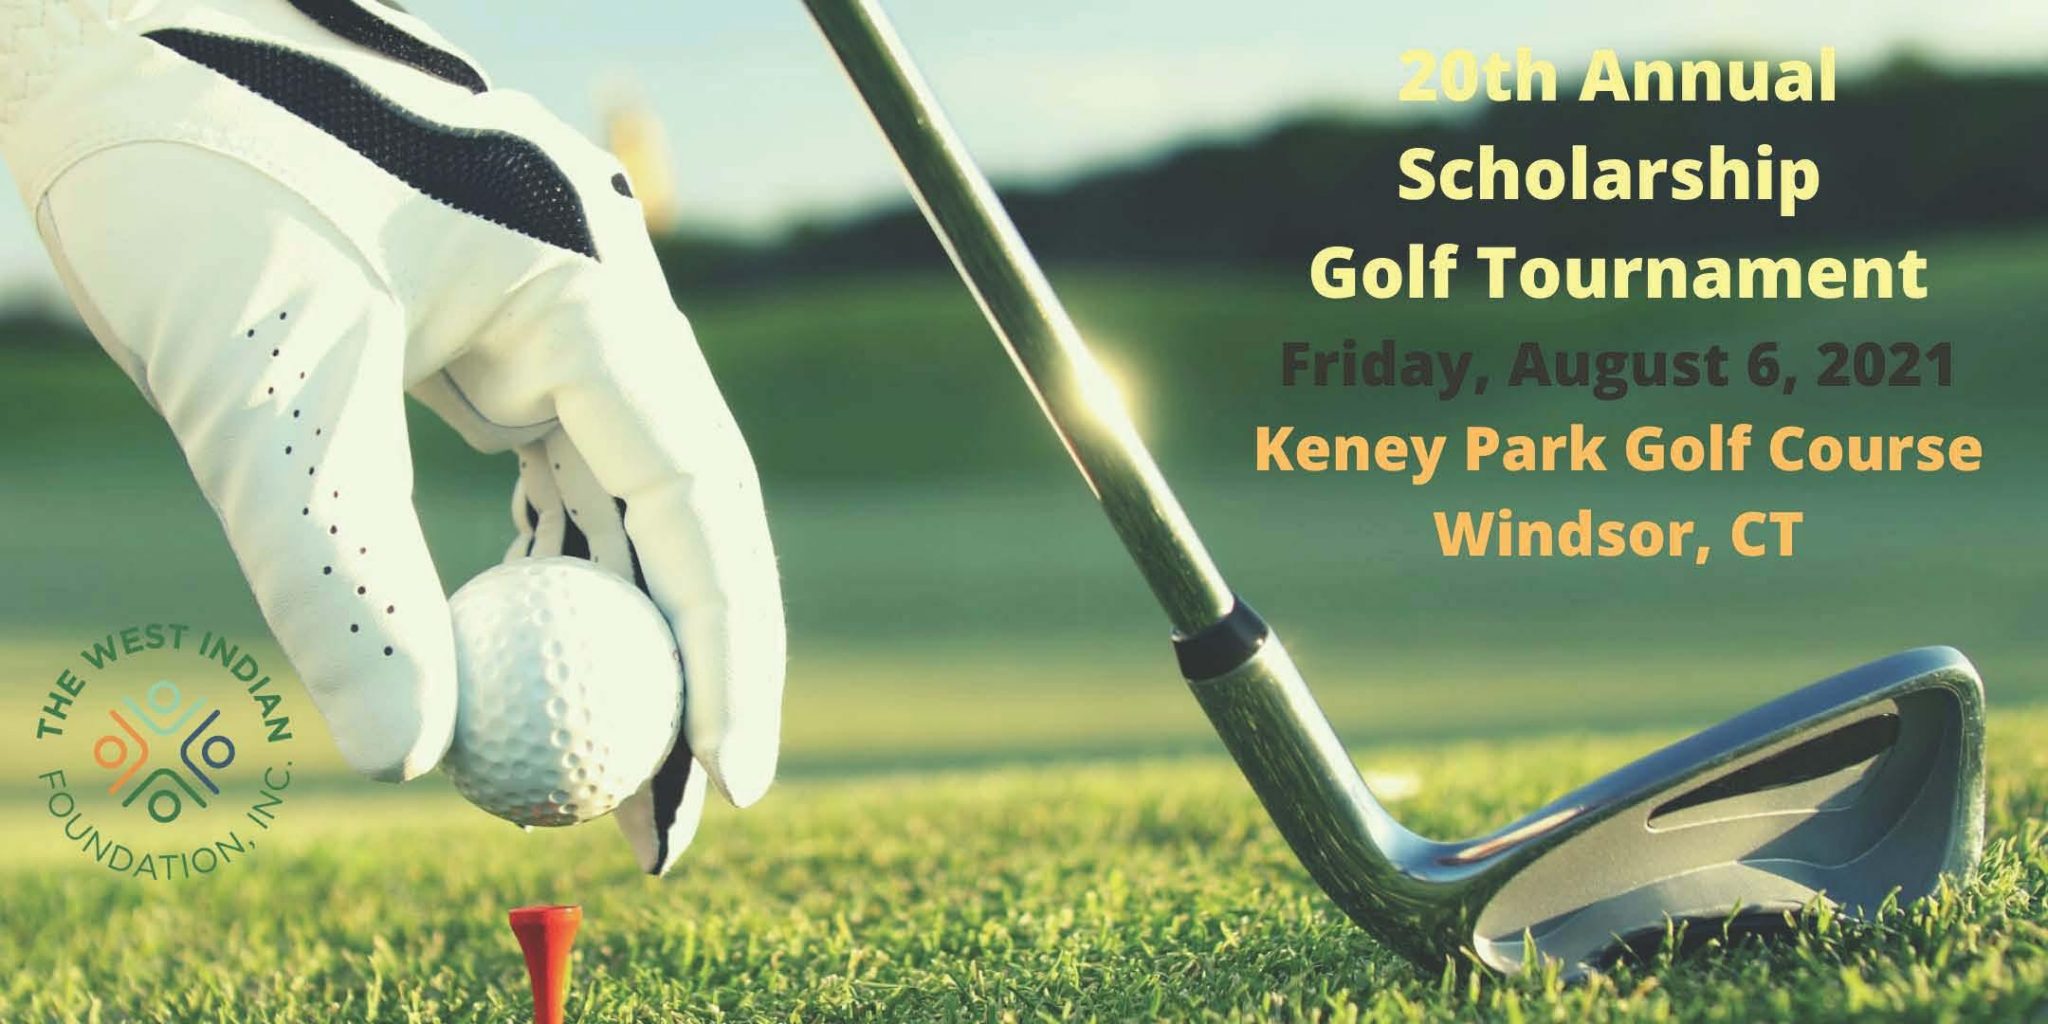 20th Annual Scholarship Golf Tournament Find Golf